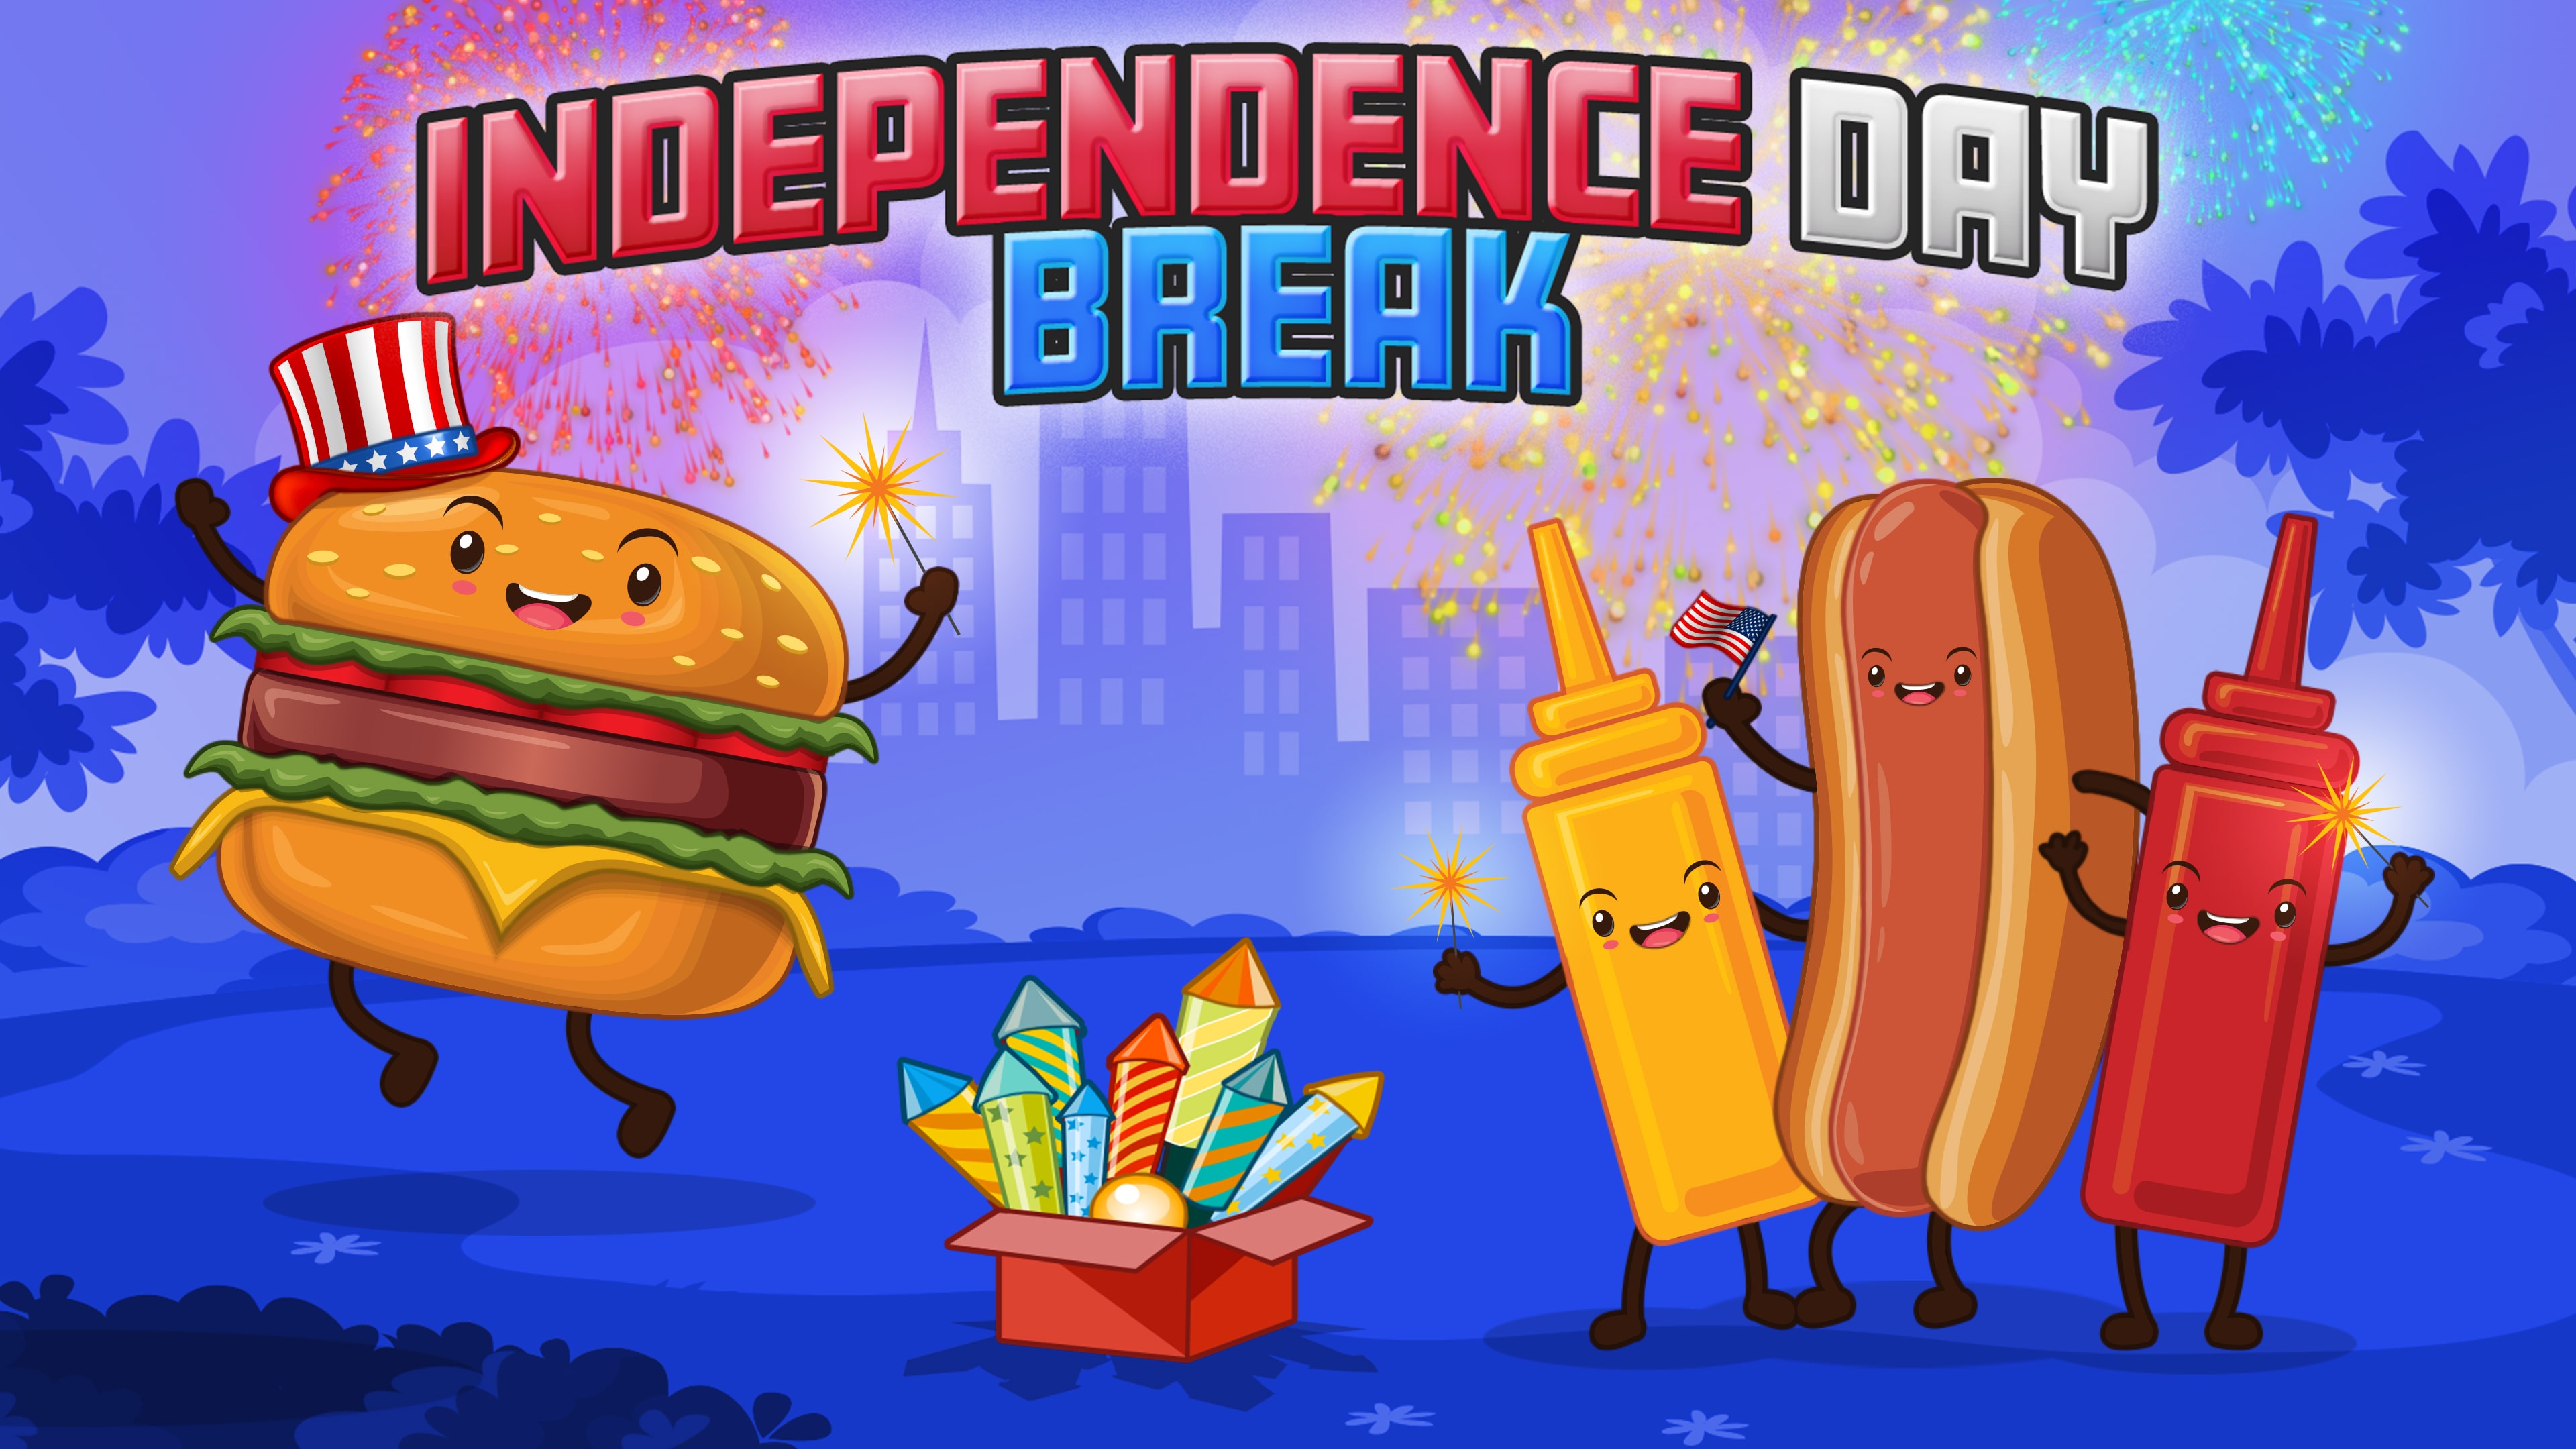 Independence Day Break - Avatar Full Game Bundle